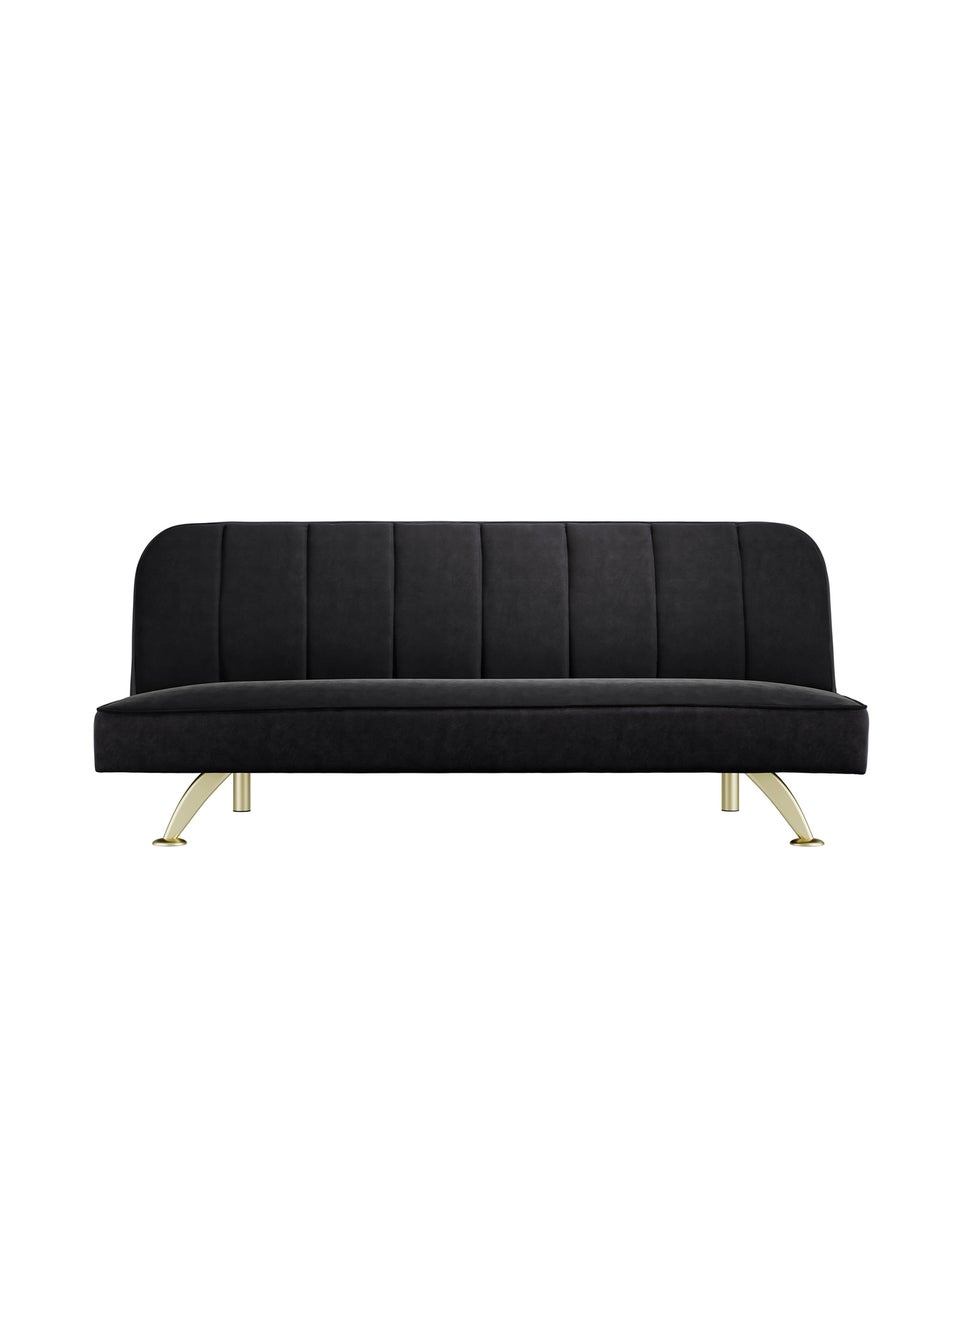 Aura Napoleonville Black Velvet/Brushed Gold Sofa Bed